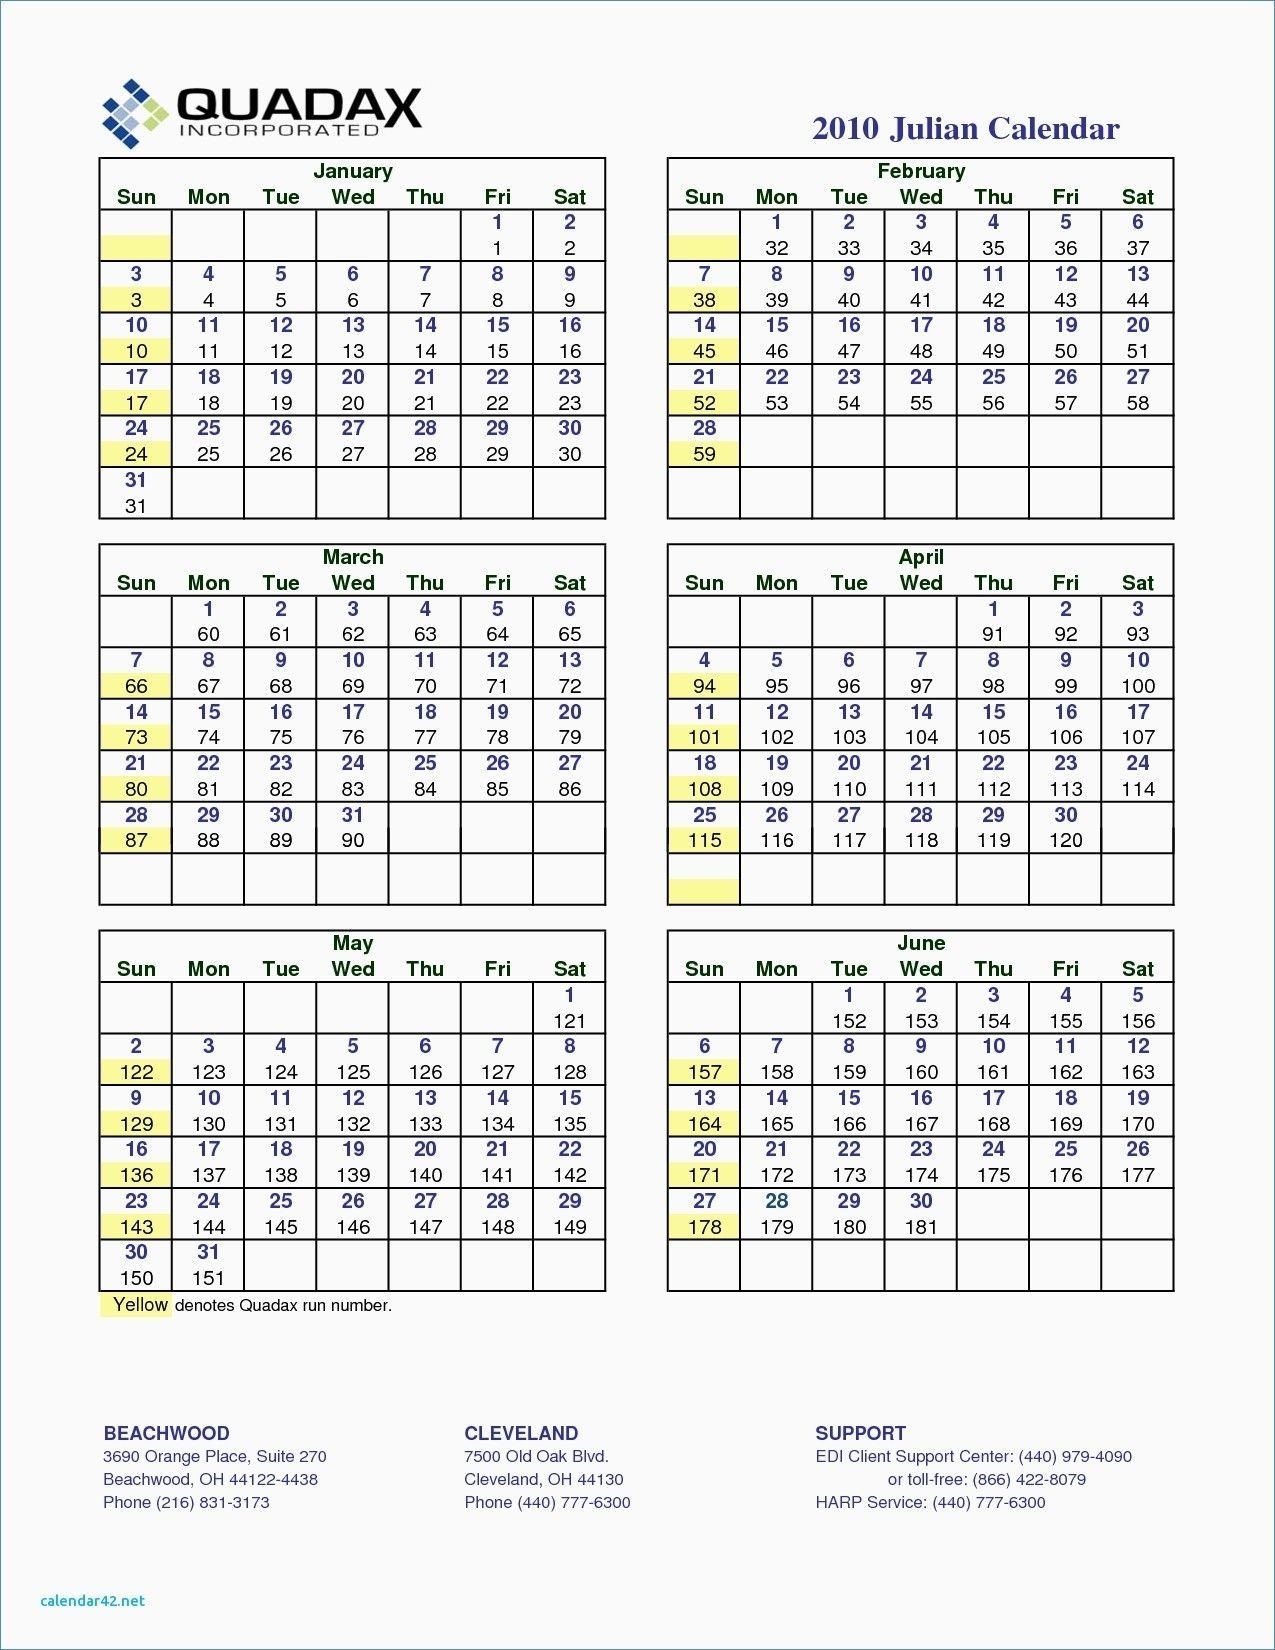 Julian Calendar 2019 Quadax July 2018 Calendar Sri Lanka